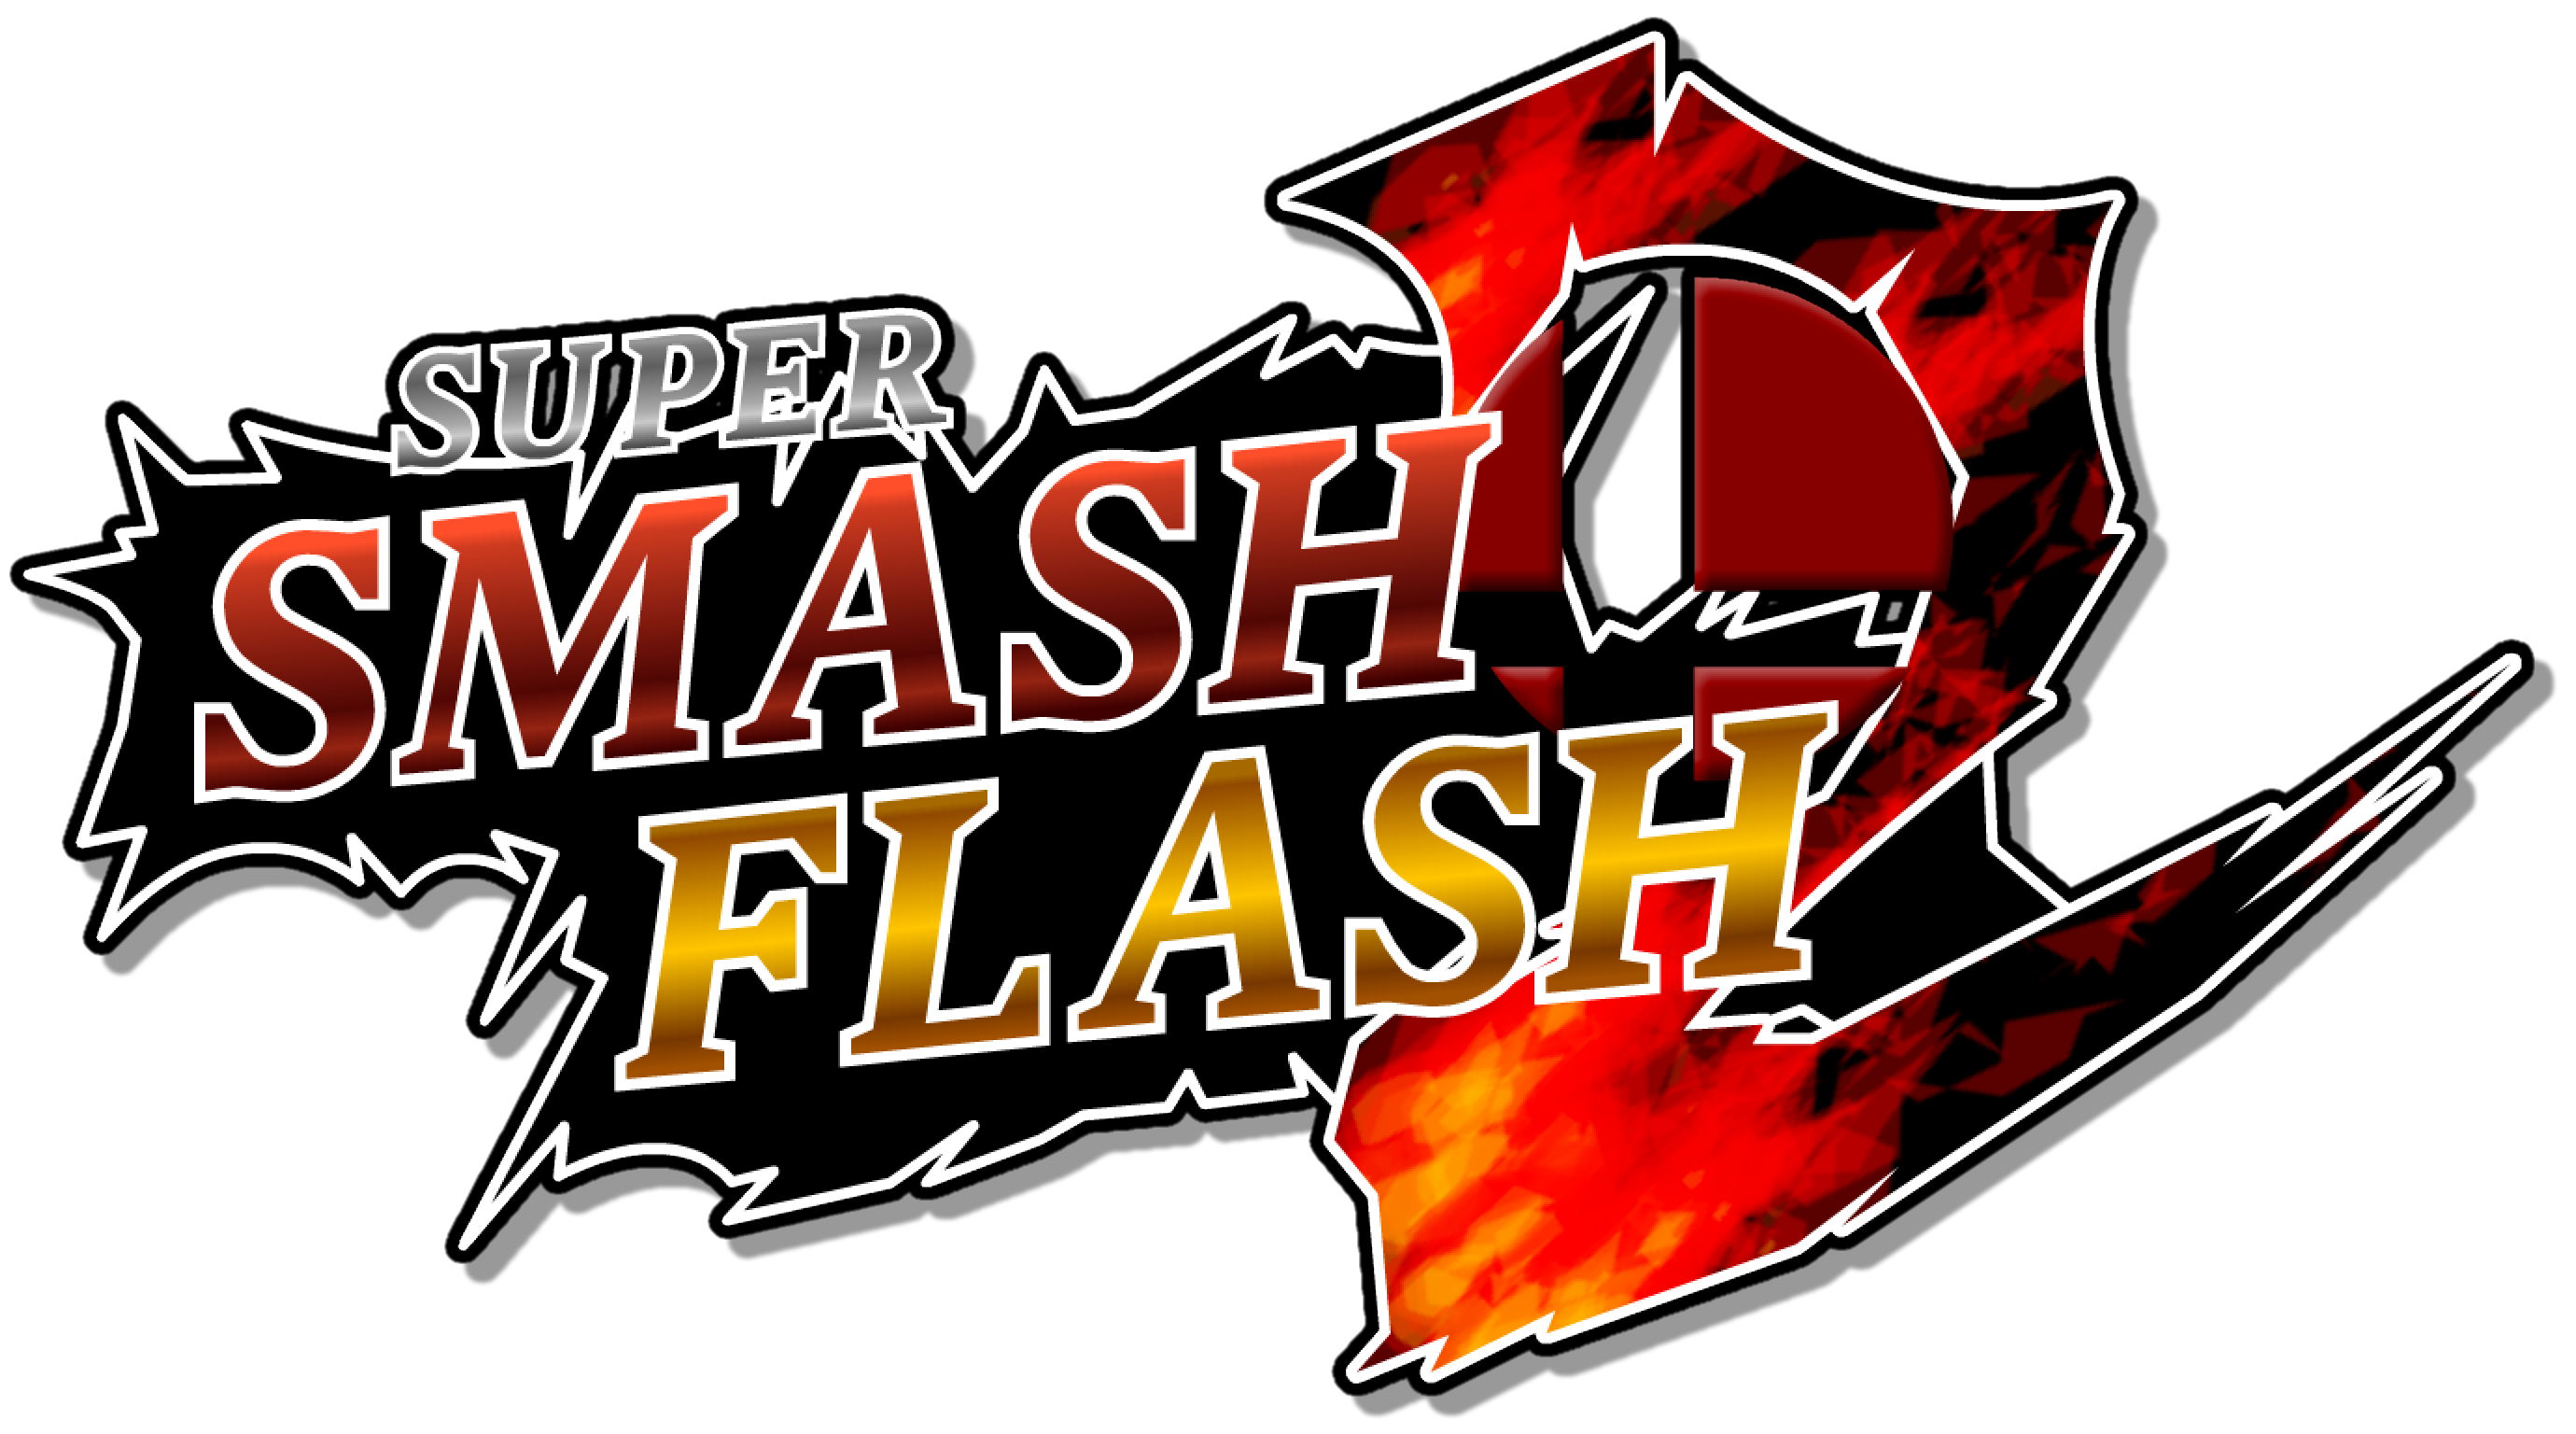 descargar super smash flash 2 1.1.0.1 mediafire